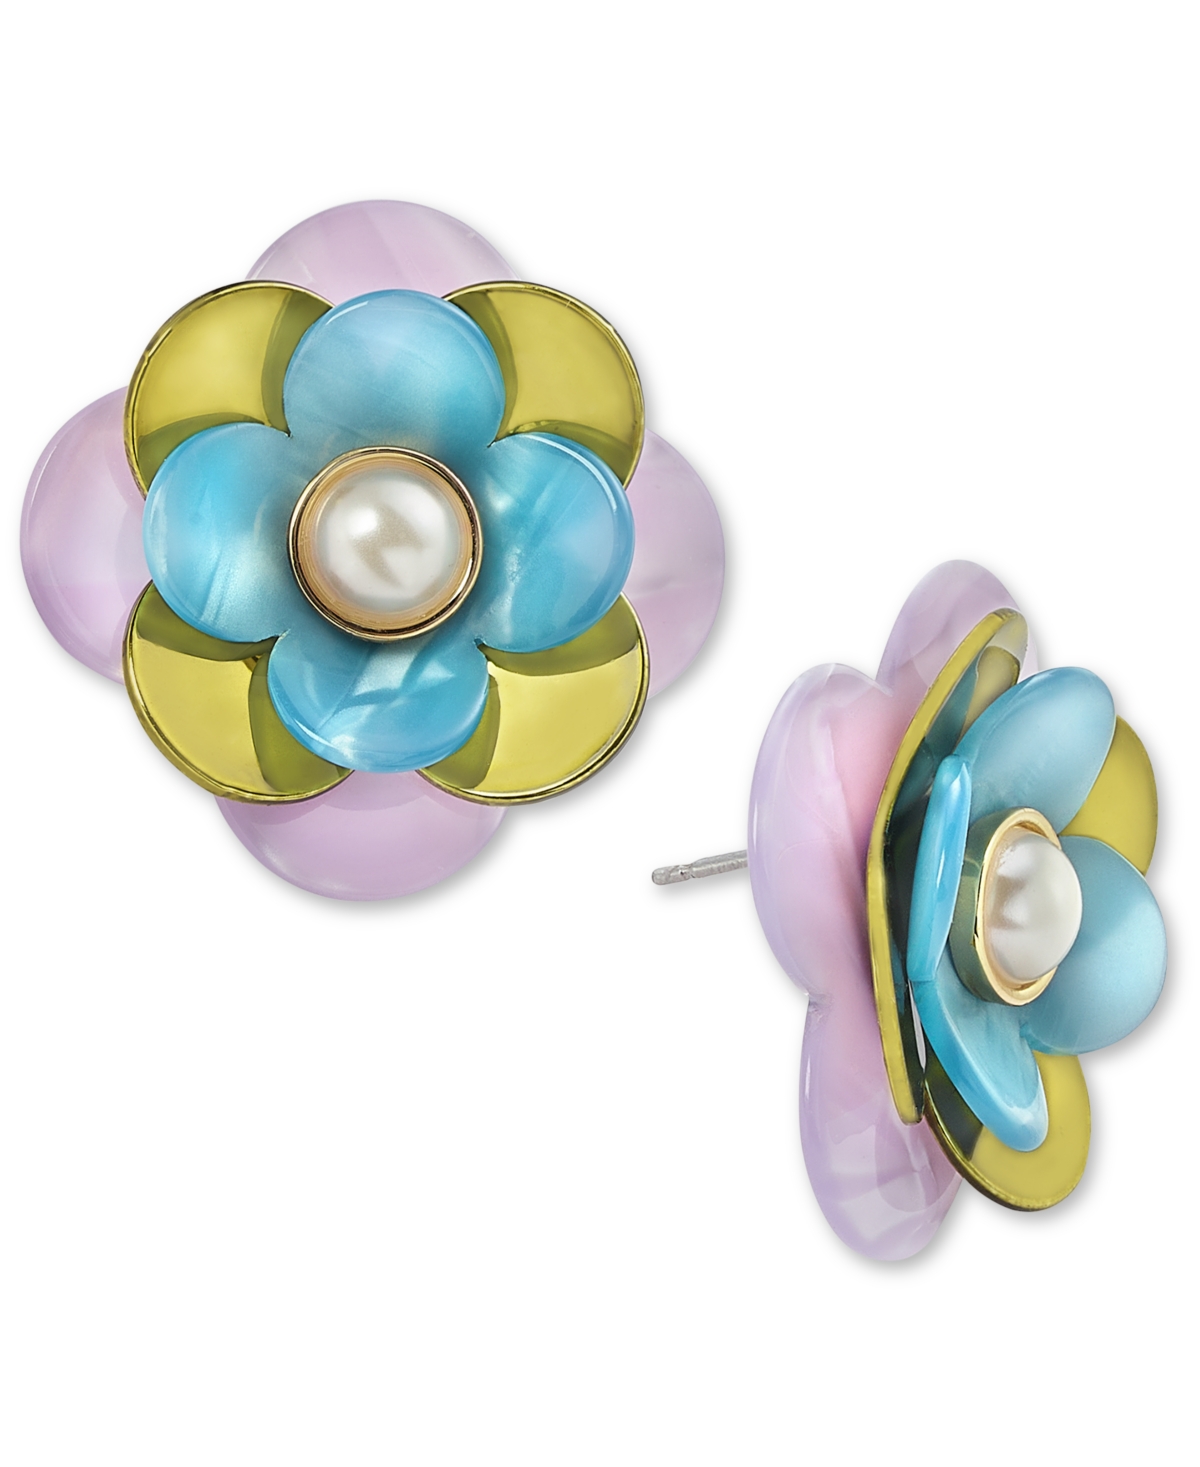 Imitation Pearl 3D Flower Stud Earrings, Created for Macy's - Blue